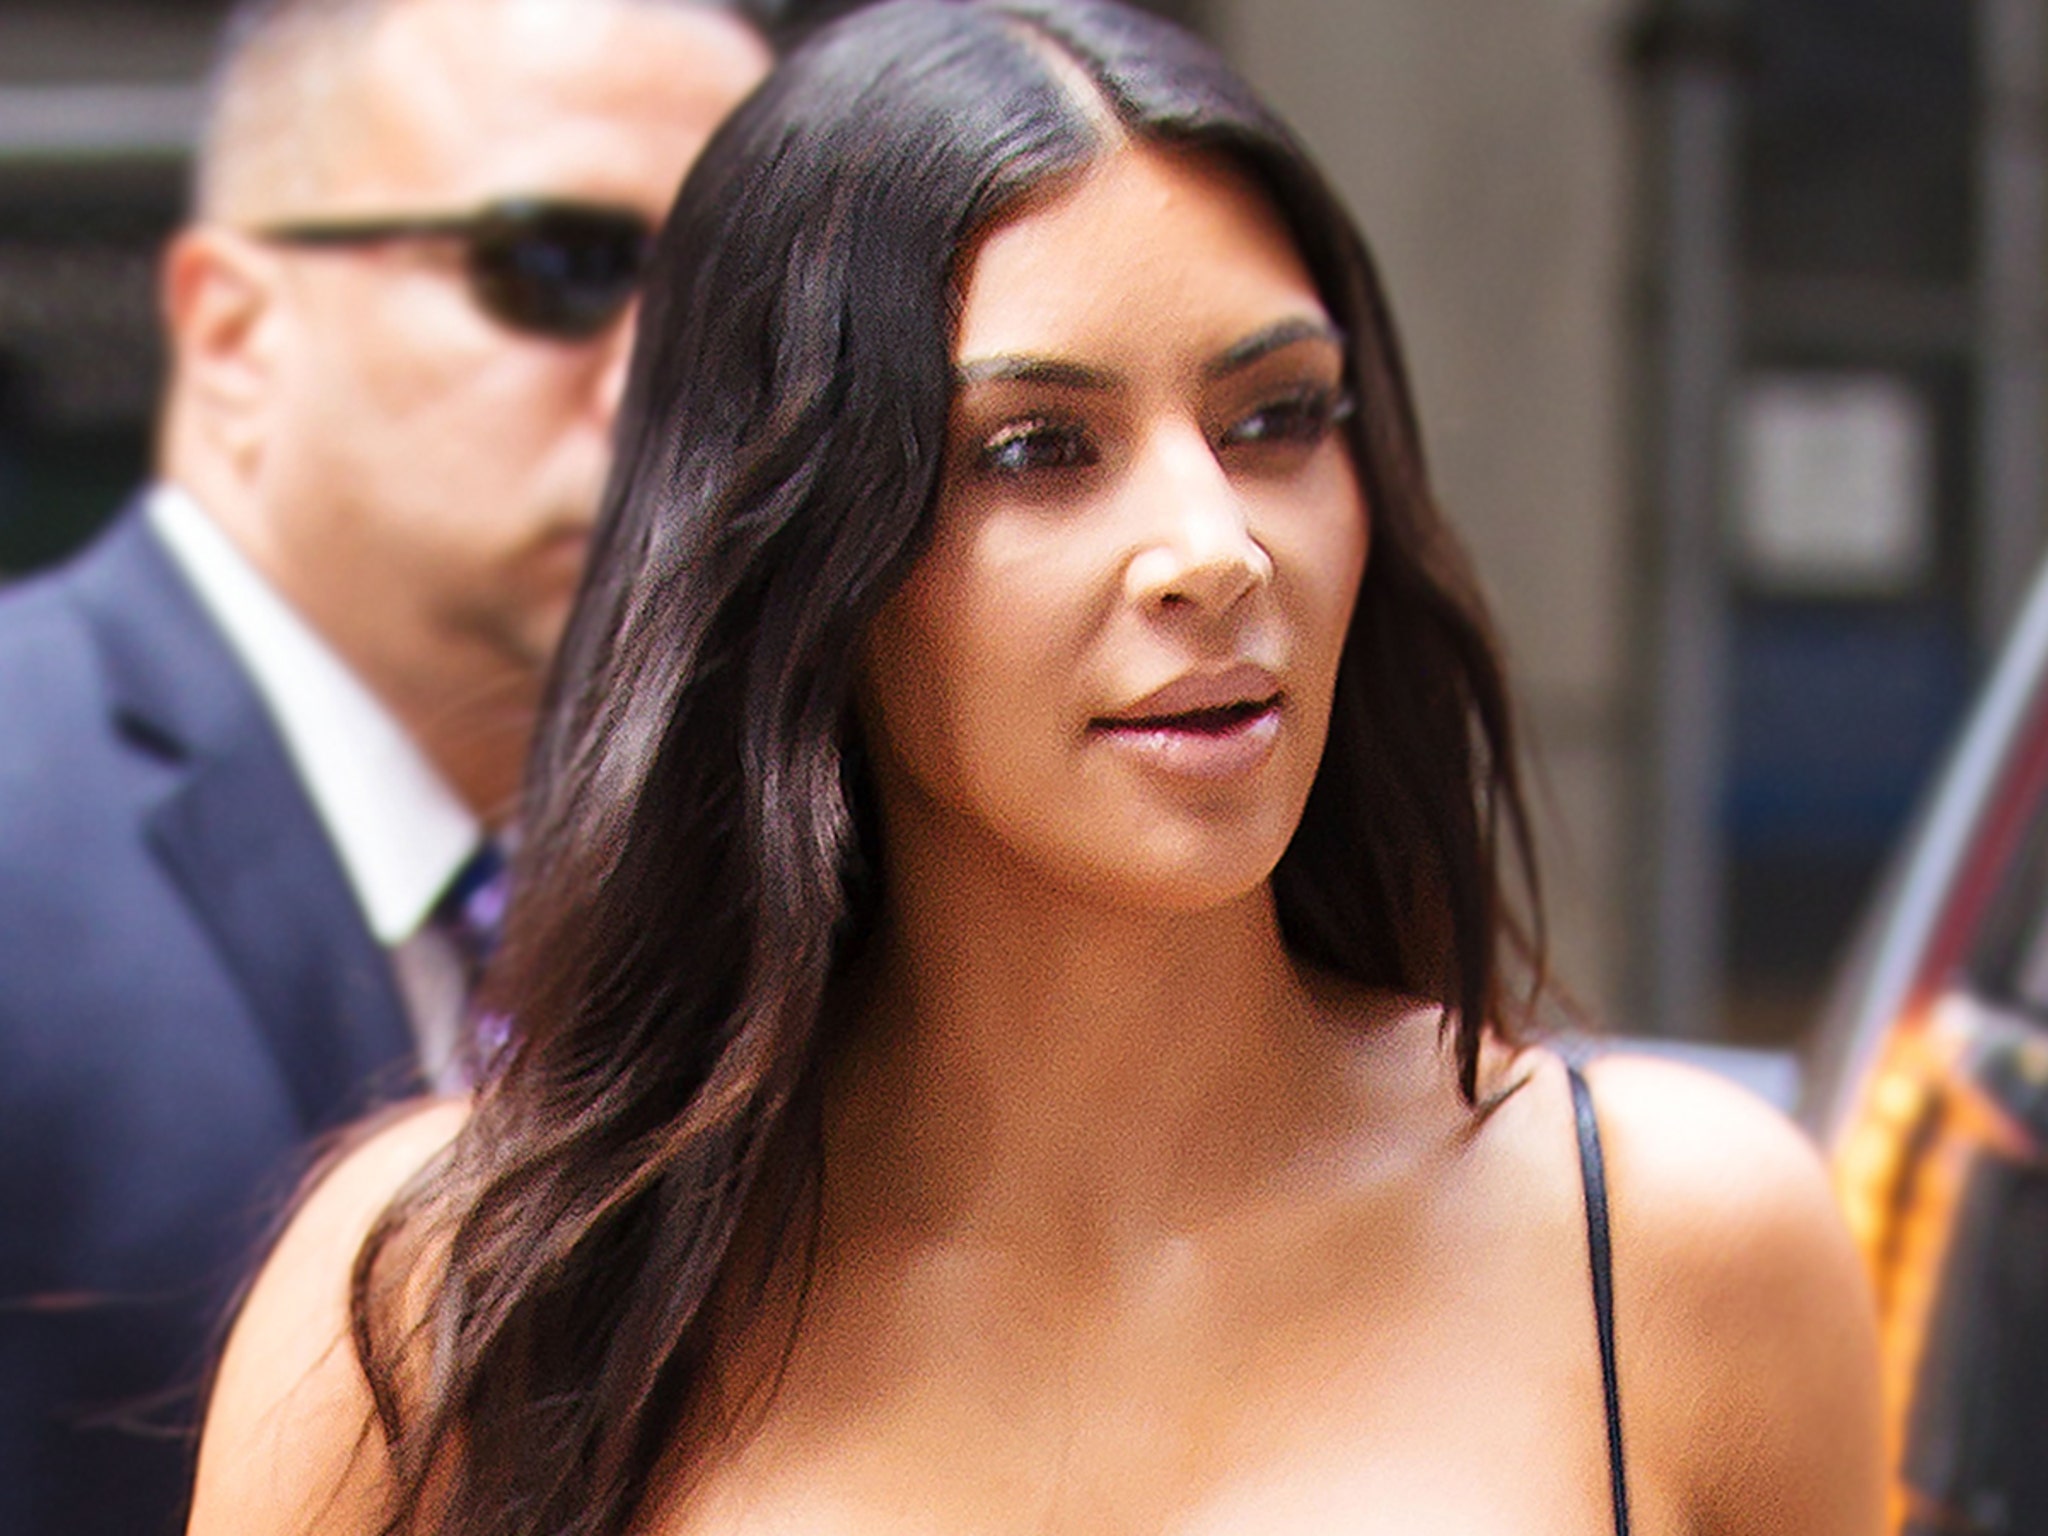 Kim Kardashian's shapewear line gets new name after backlash